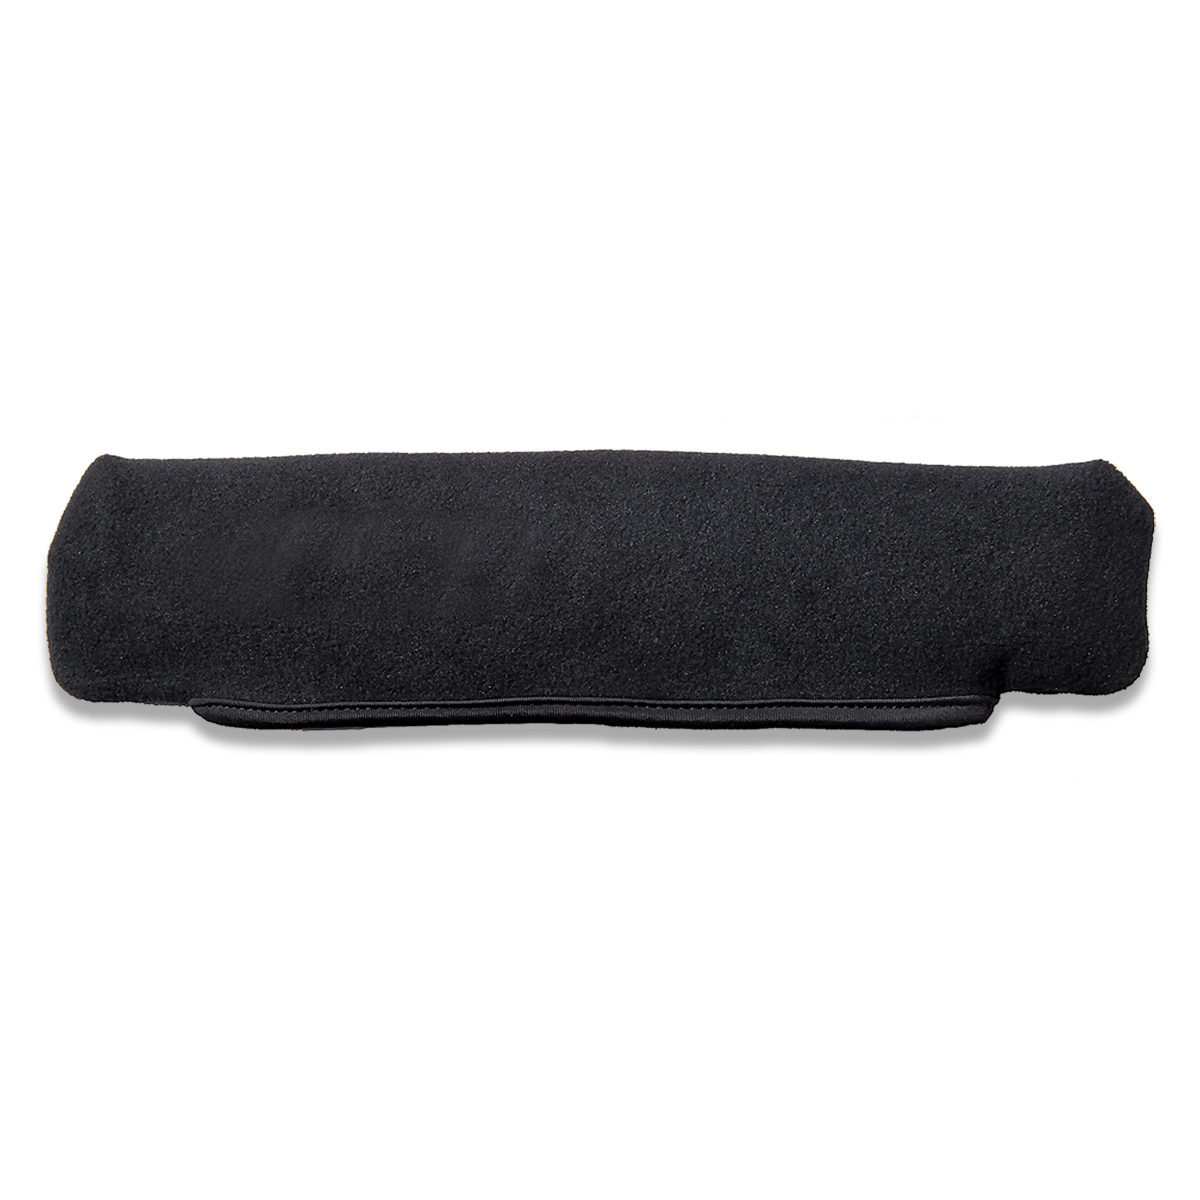 Чехол Burris Scope Covers для оптического прицела от 8,5 до 10,5 дюймов, объектив до 39 мм, размер Small (626061)